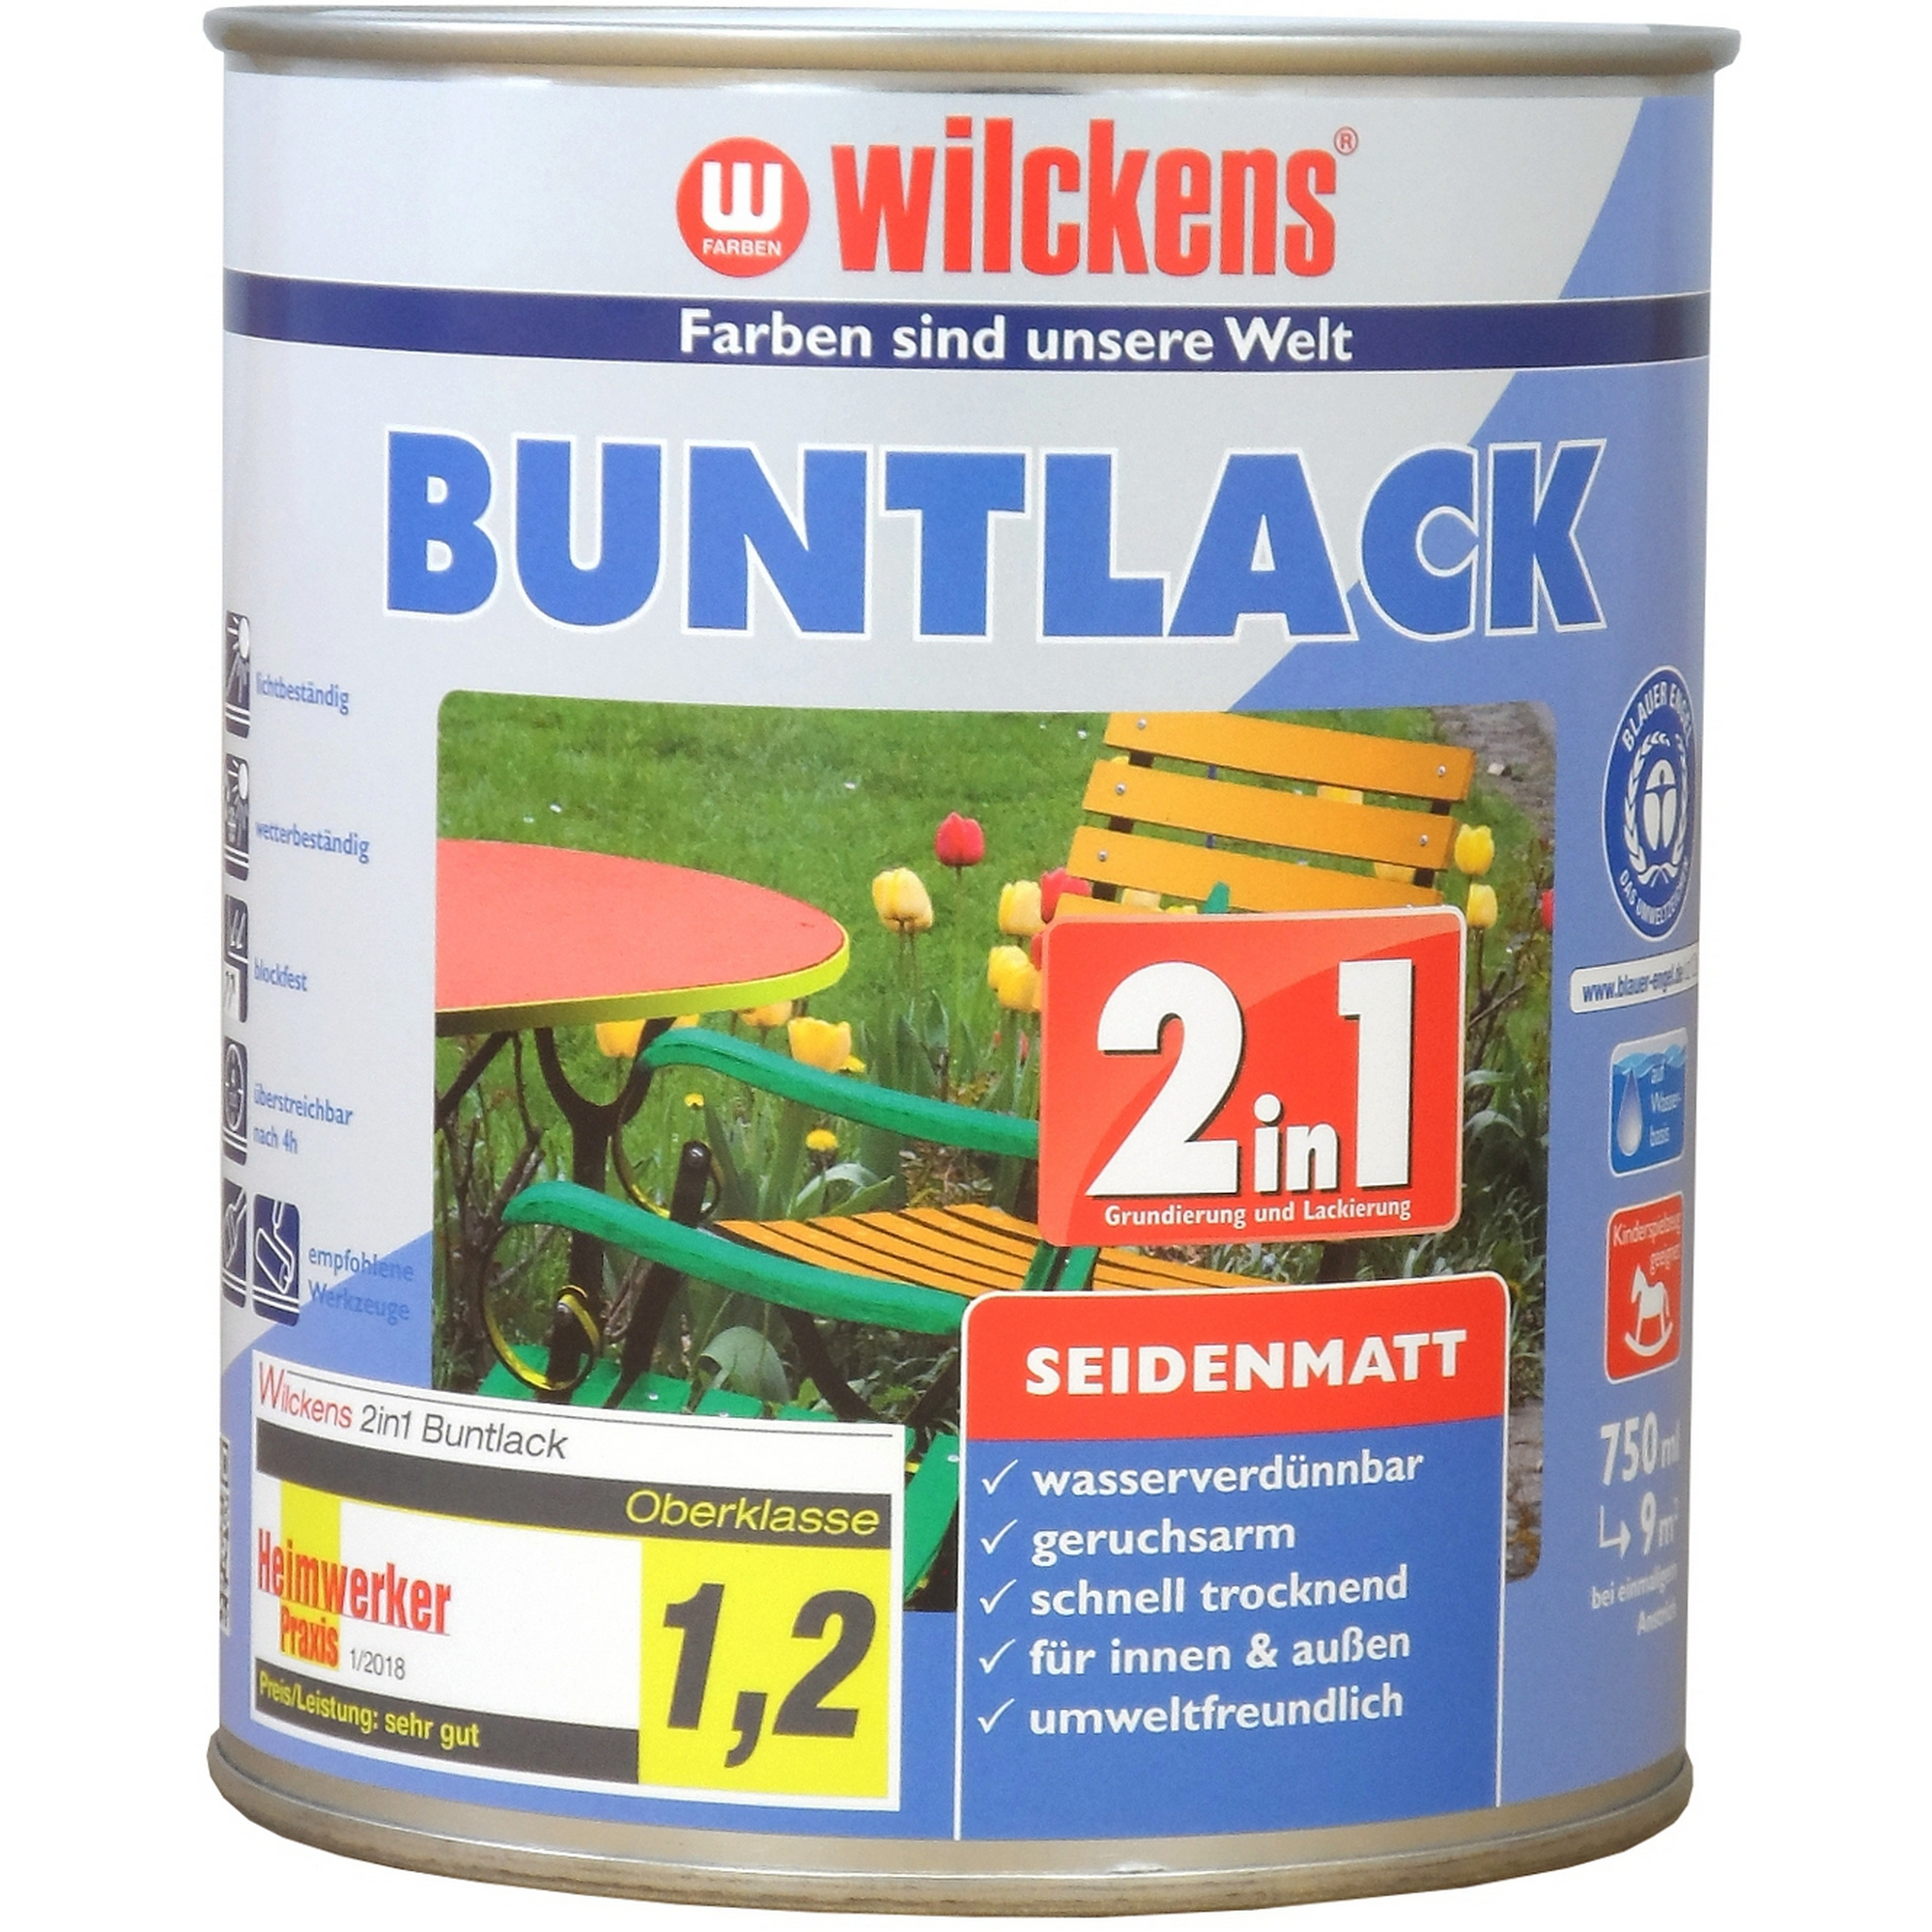 2in1 Buntlack anthrazitgrau seidenmatt 750 ml + product picture